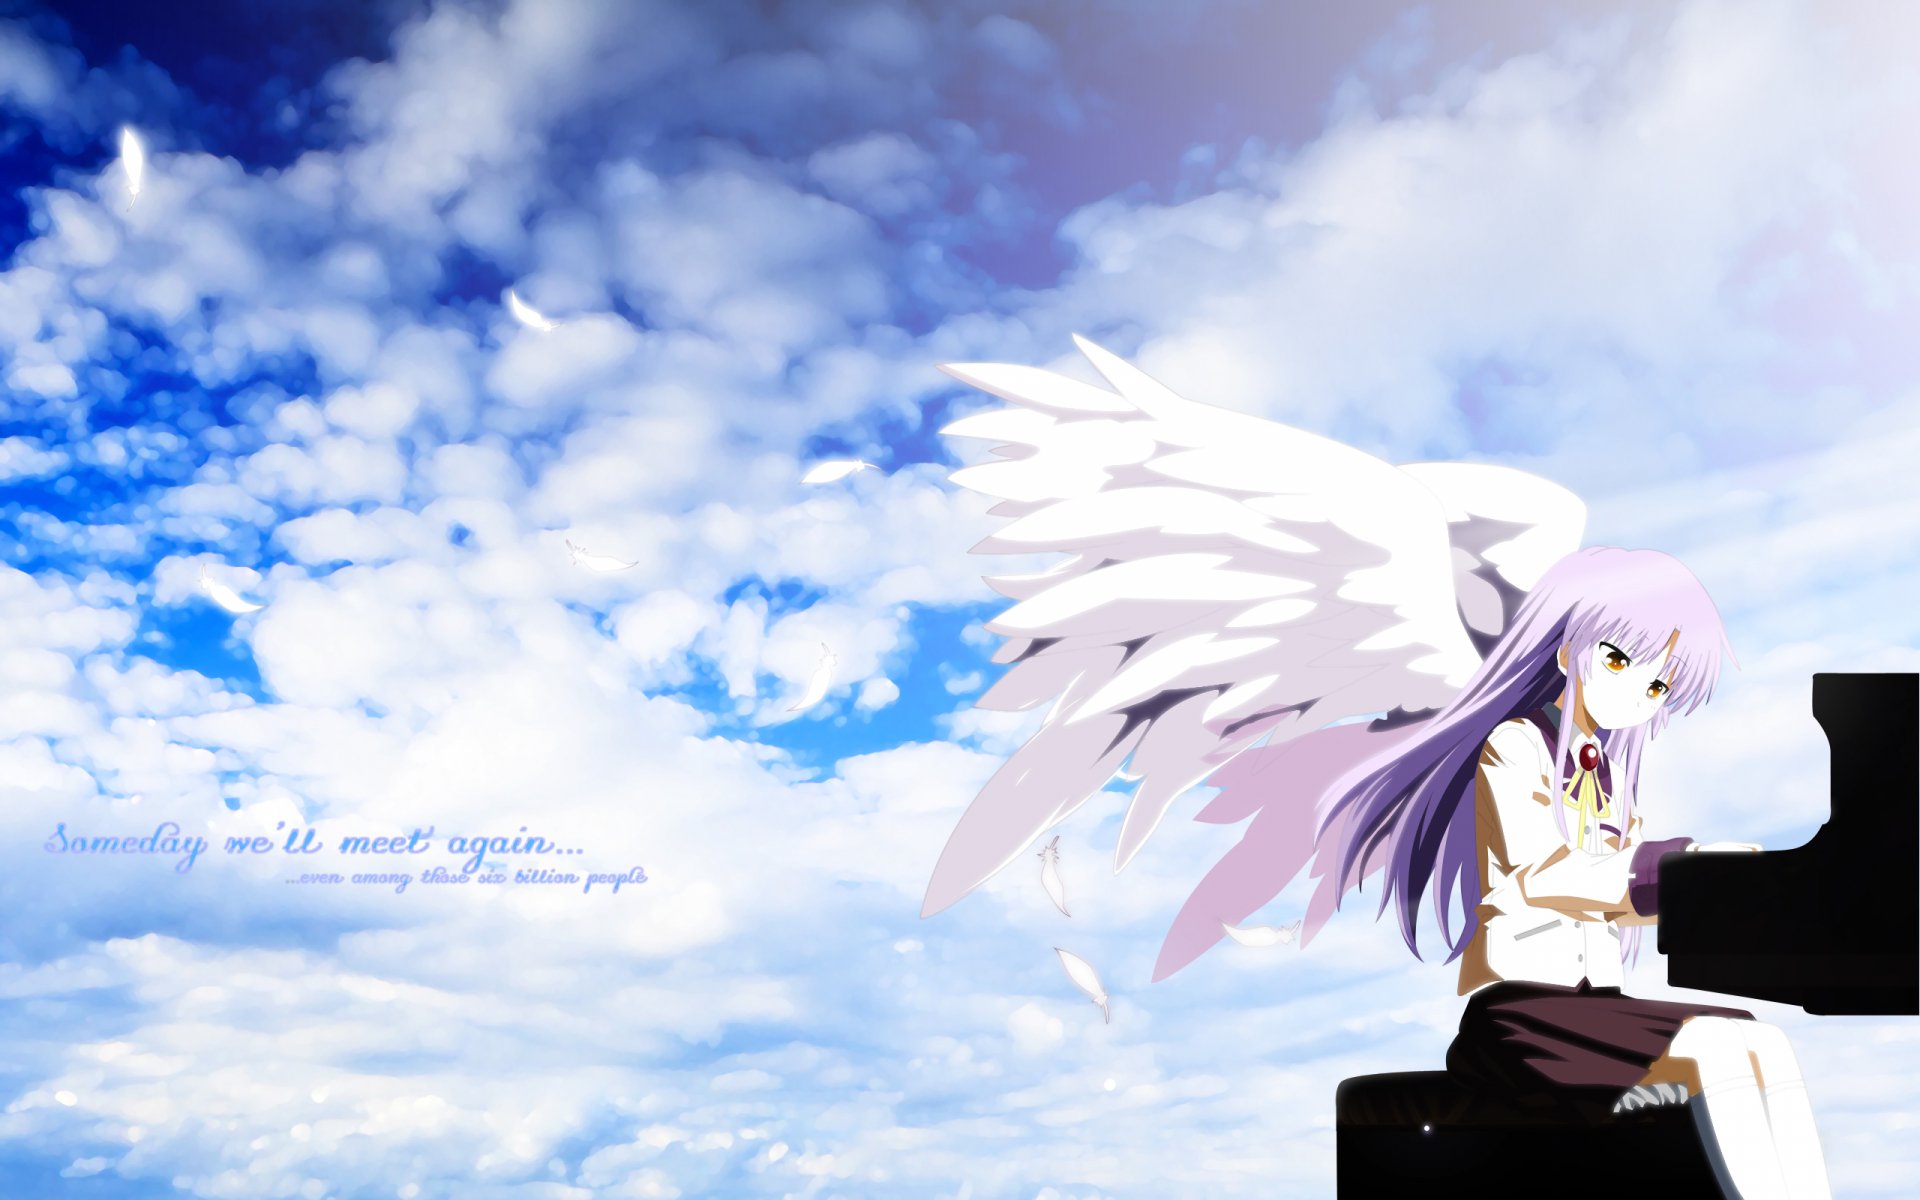 Download Kanade Tachibana Anime Angel Beats!  HD Wallpaper